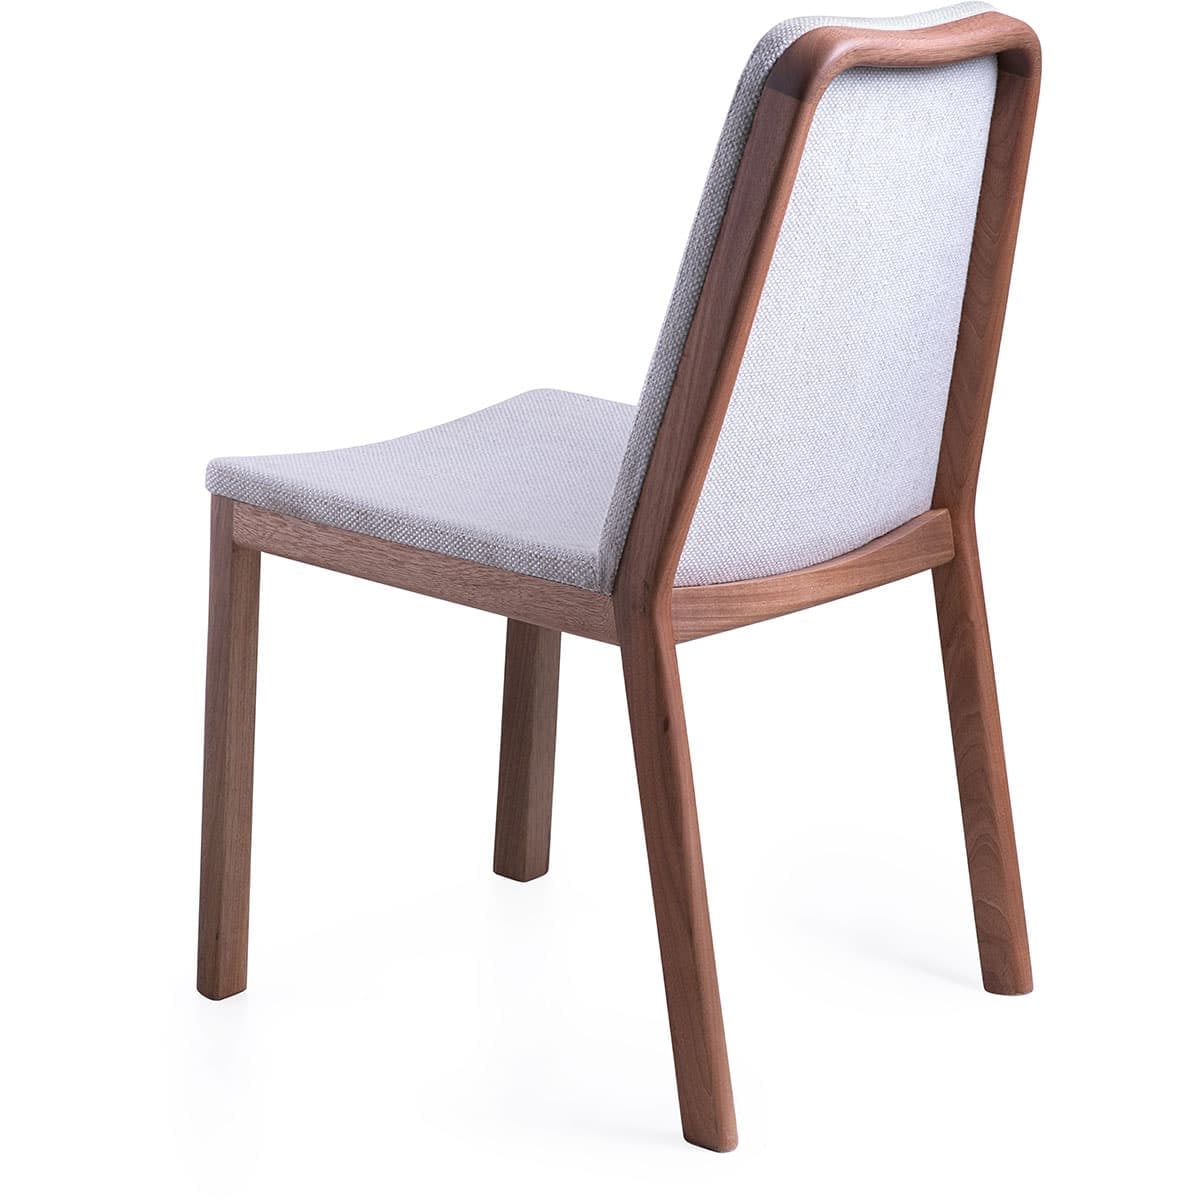 Designers Plataforma4 Design Sal Chair